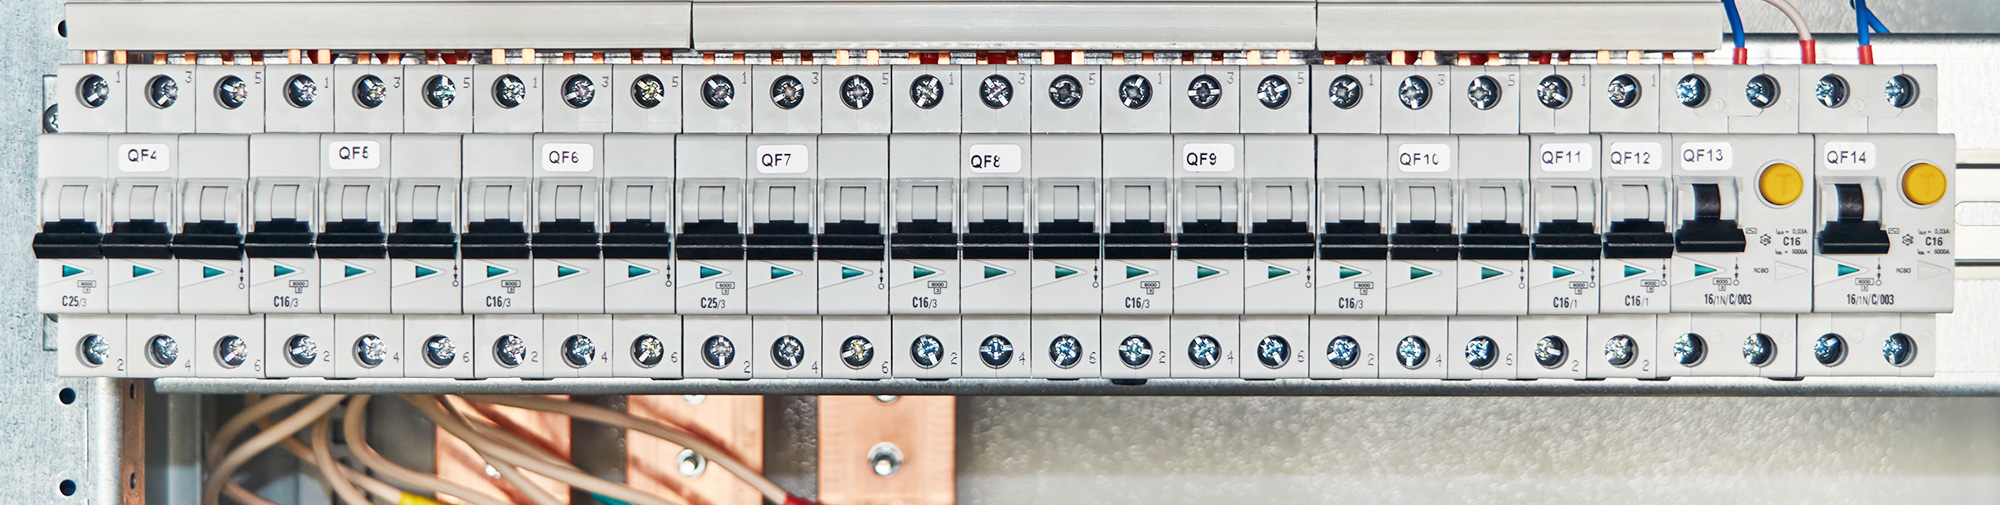 Installer un interrupteur différentiel 30mA